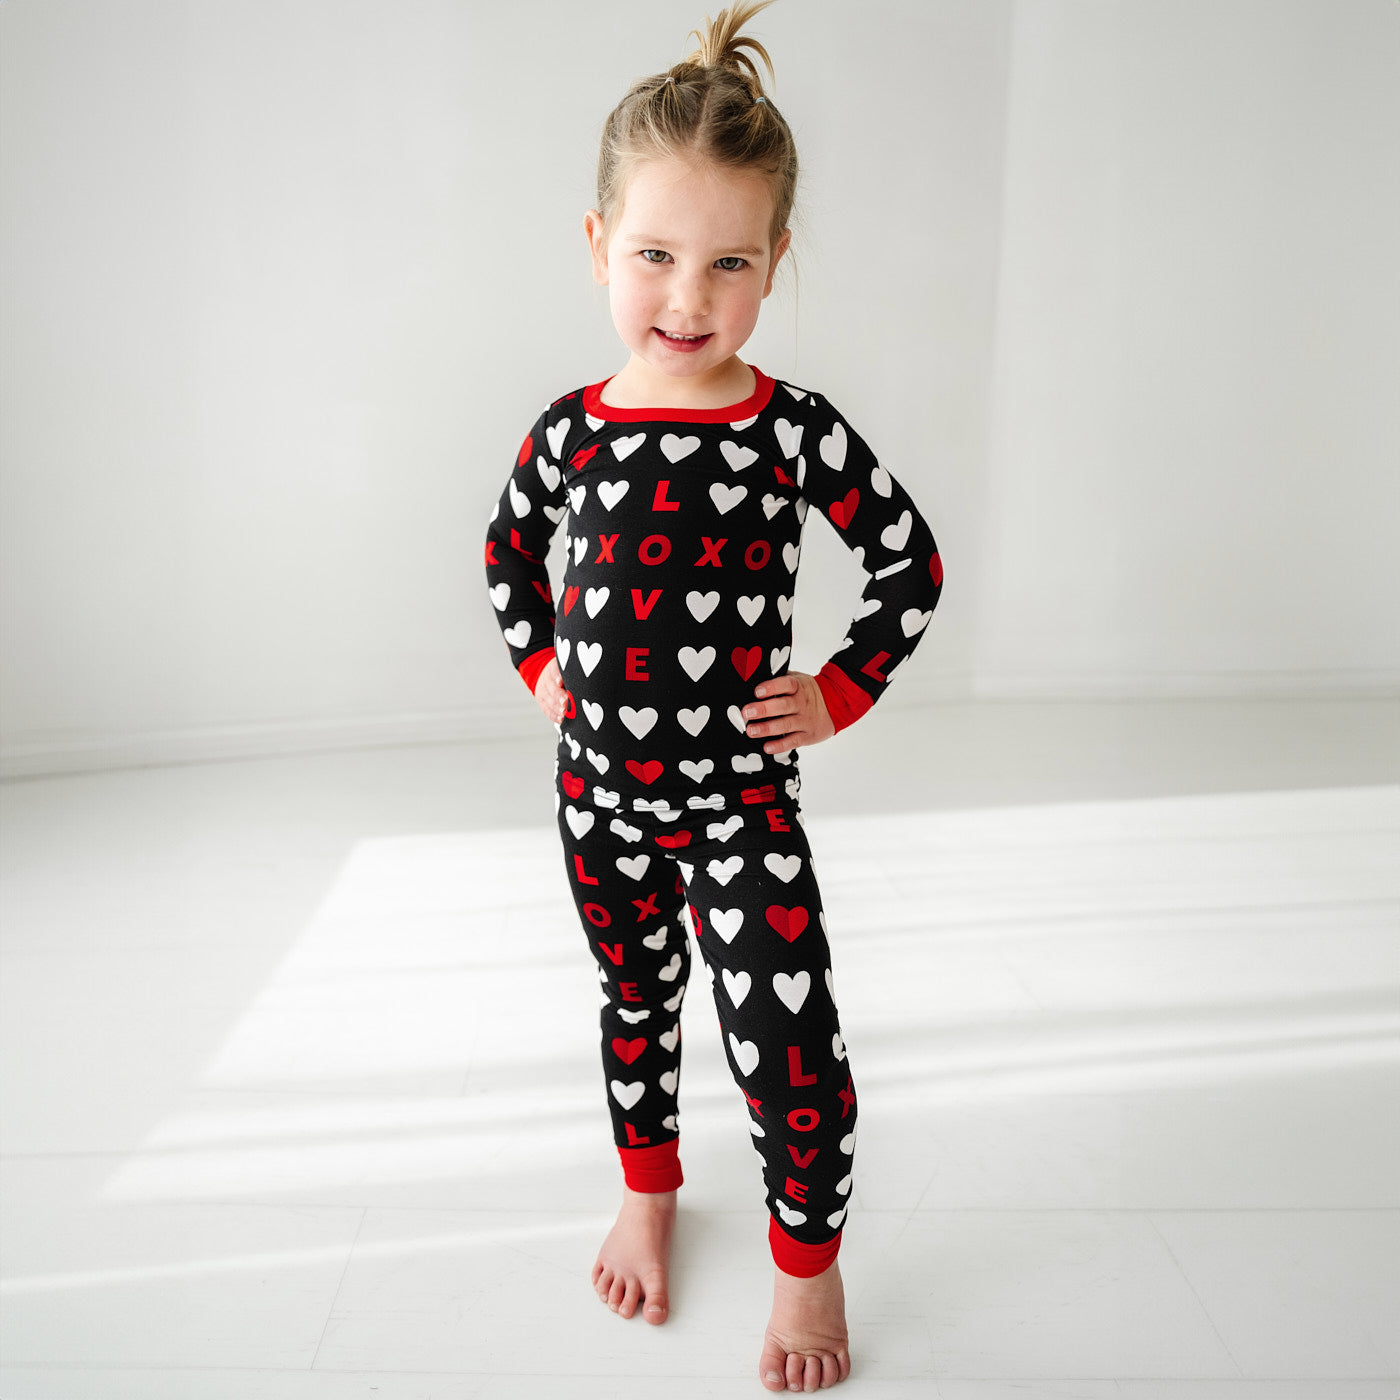 Child posing wearing Black XOXO two piece pajama set